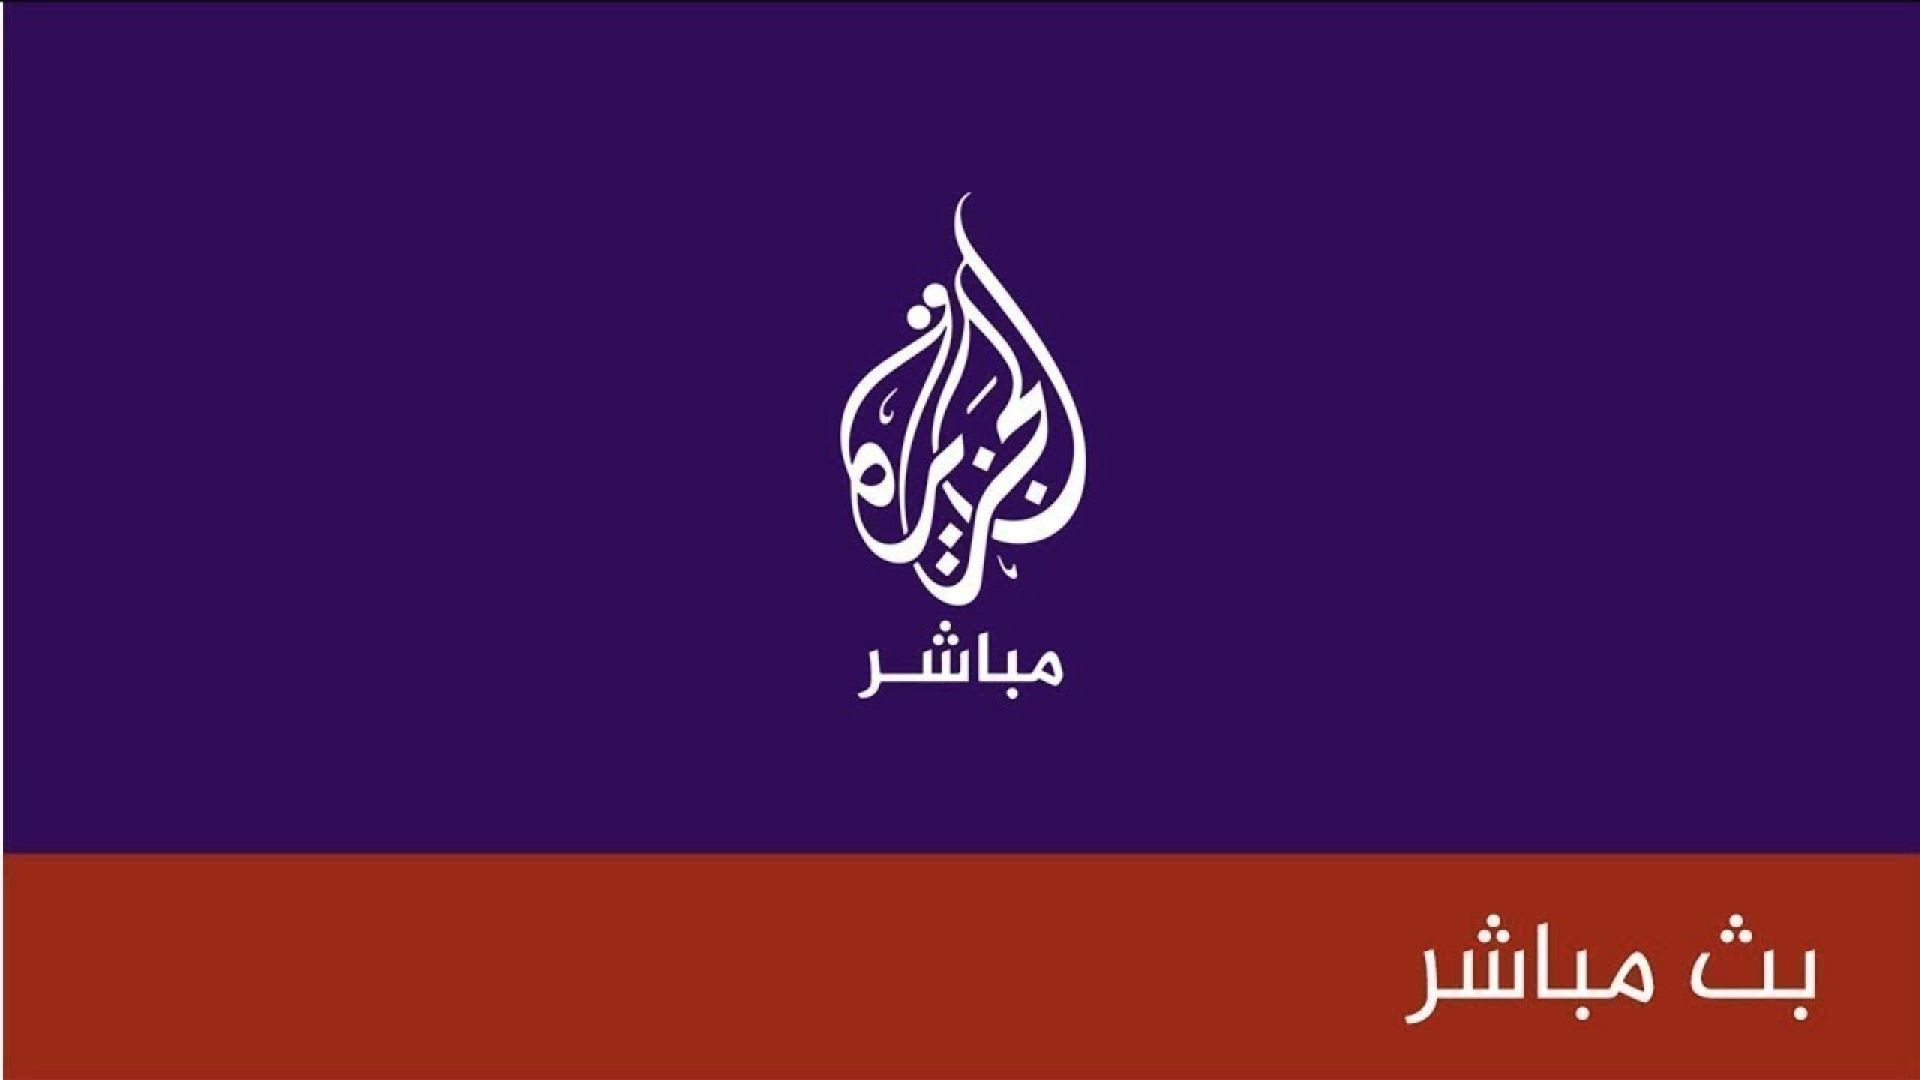 Al Jazeera Mubasher